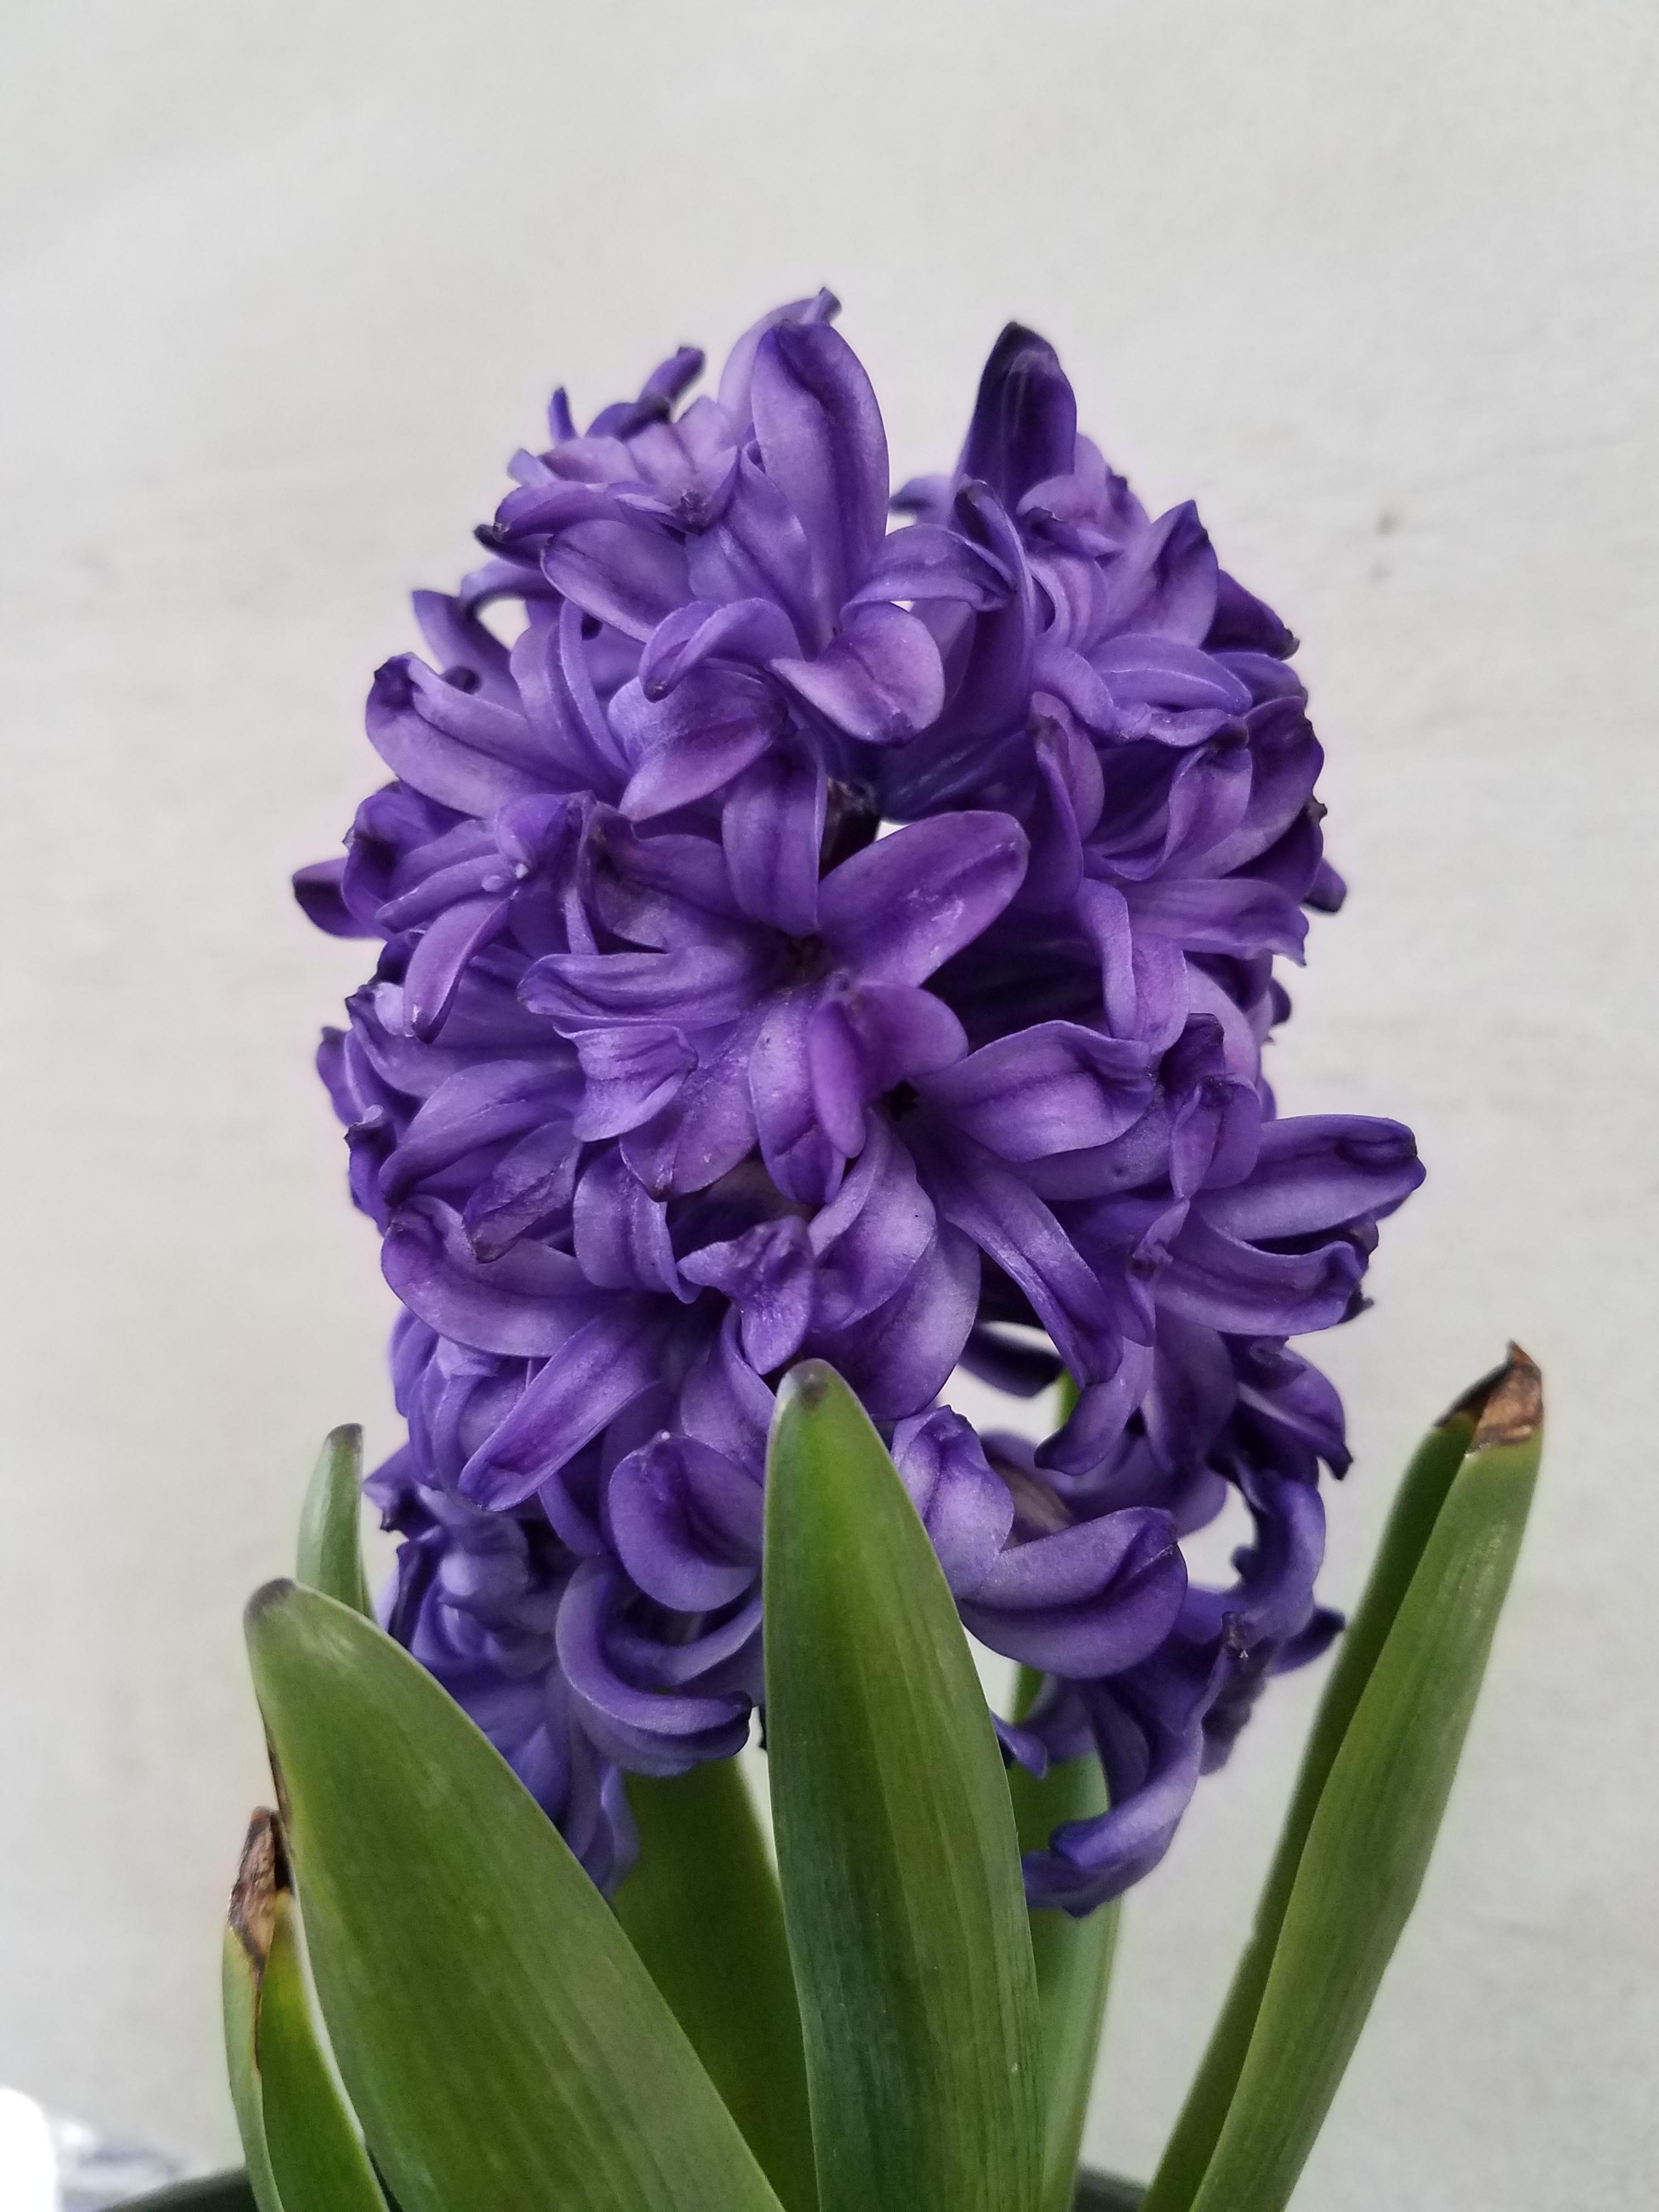 Hyacinth 'Atlantic' - Hyacinth from Leo Berbee Bulb Company